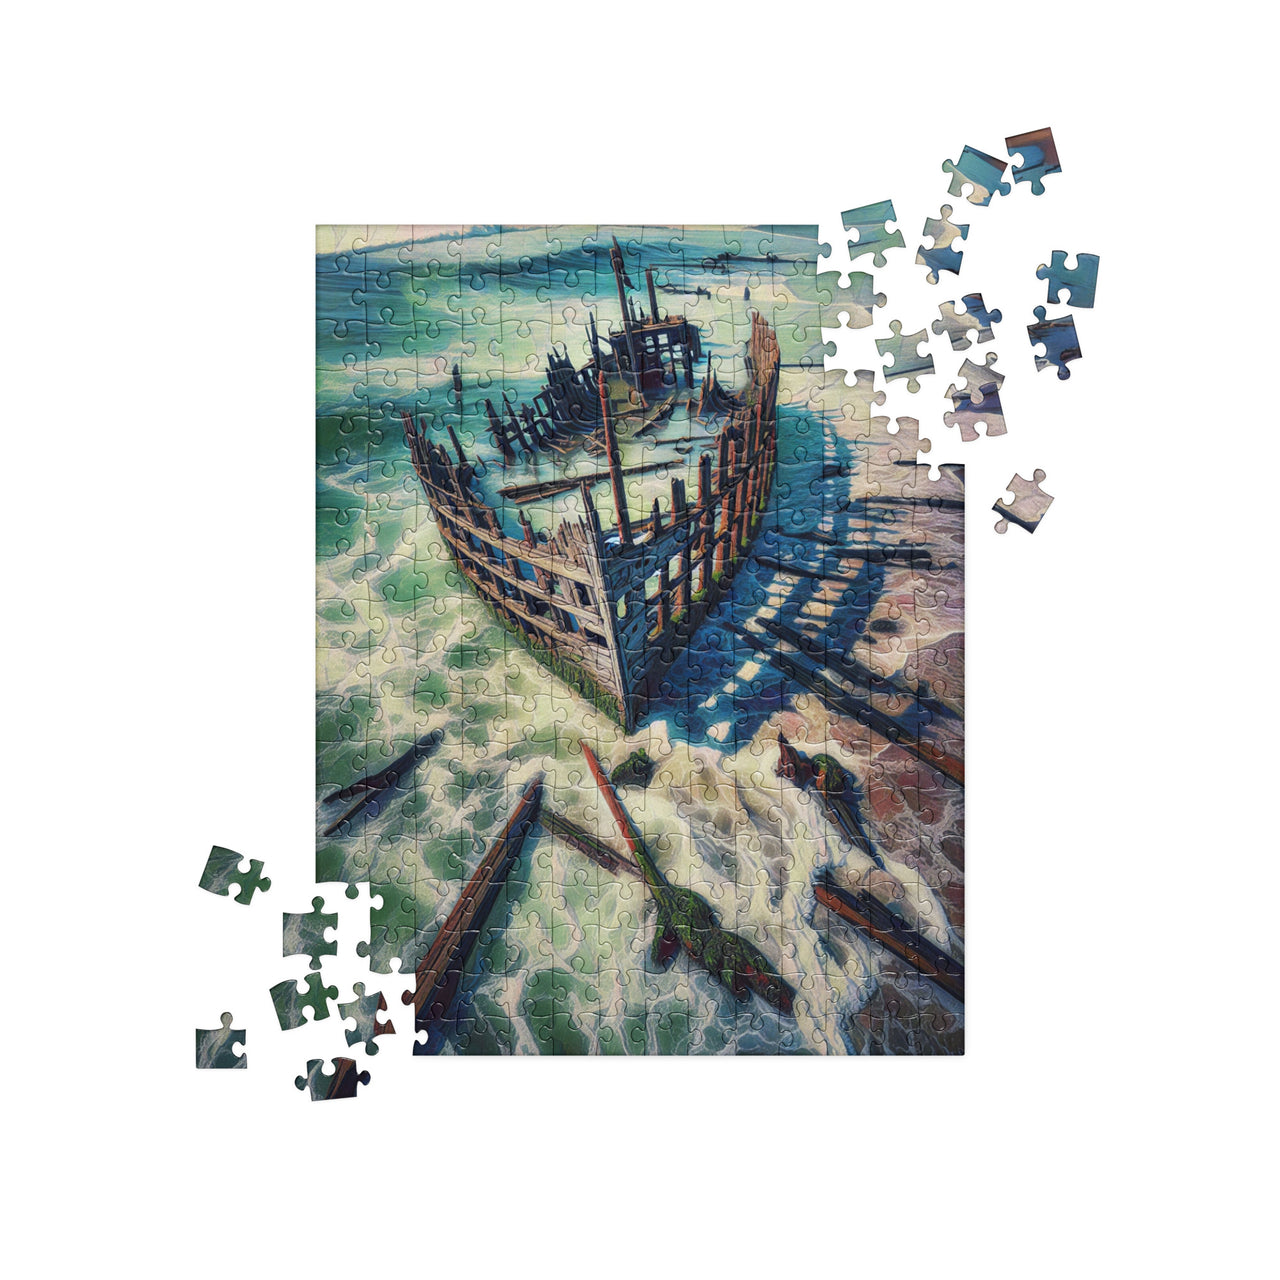 Ship Wreck on the Oregon Coast - Digital Art - Jigsaw puzzle